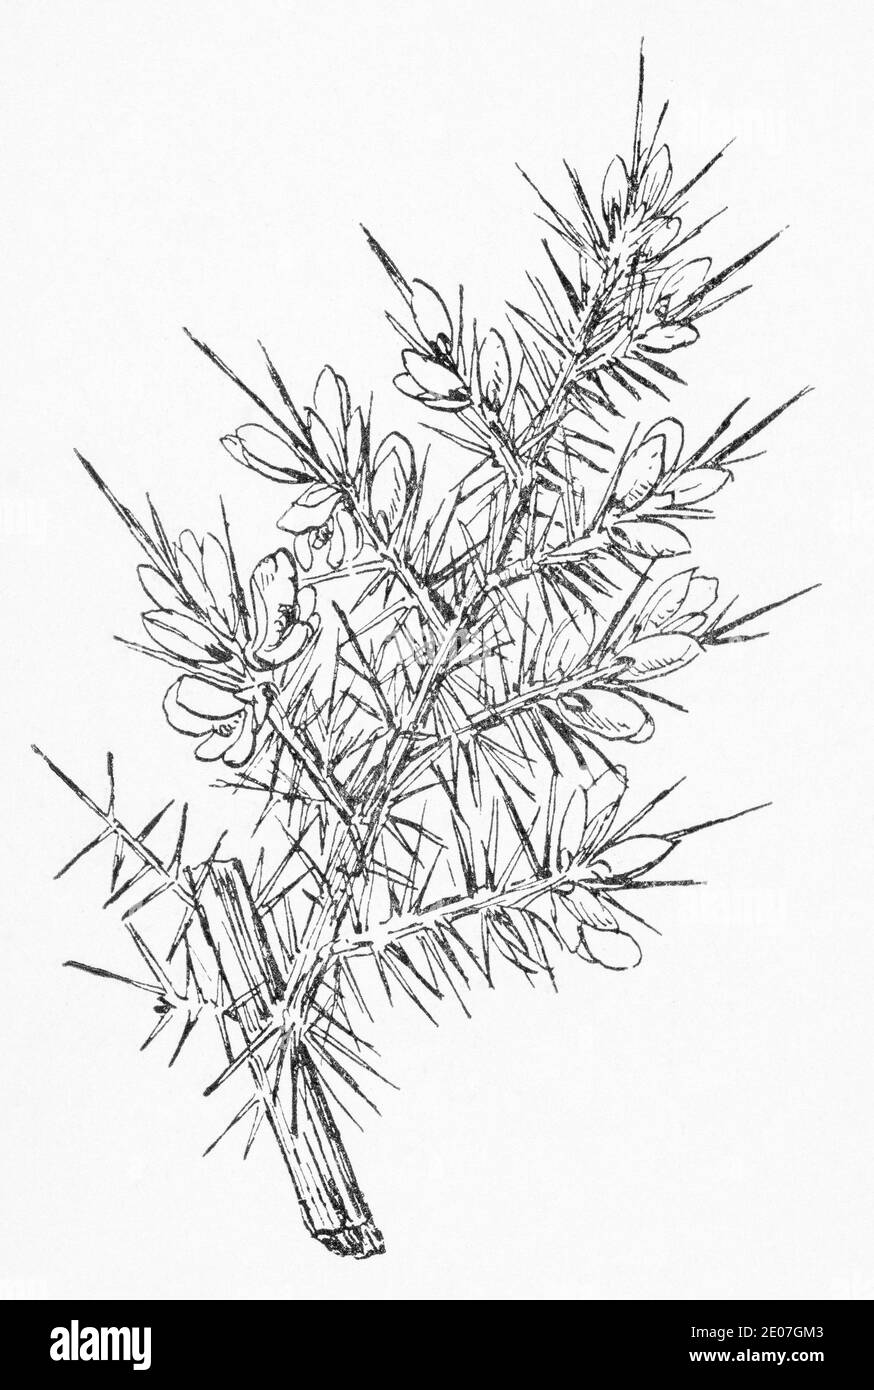 Antica illustrazione botanica incisione di Gorse, Furze / Ulex europaeus. Pianta di erbe medicinali tradizionali. Vedere Note Foto Stock